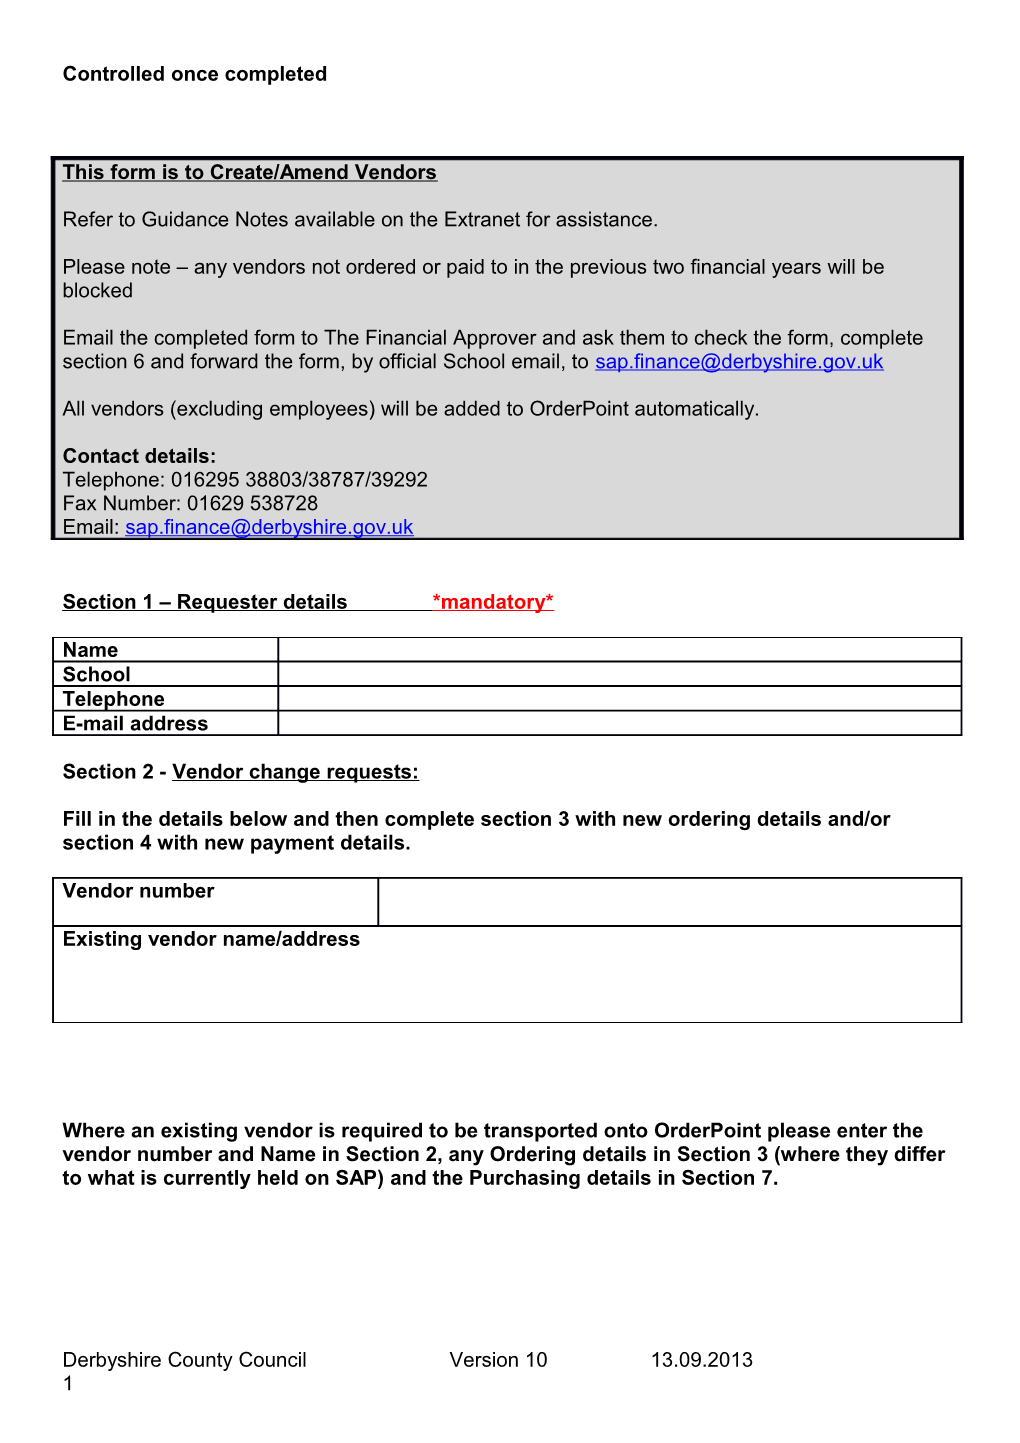 MD4 School Vendor Request Form